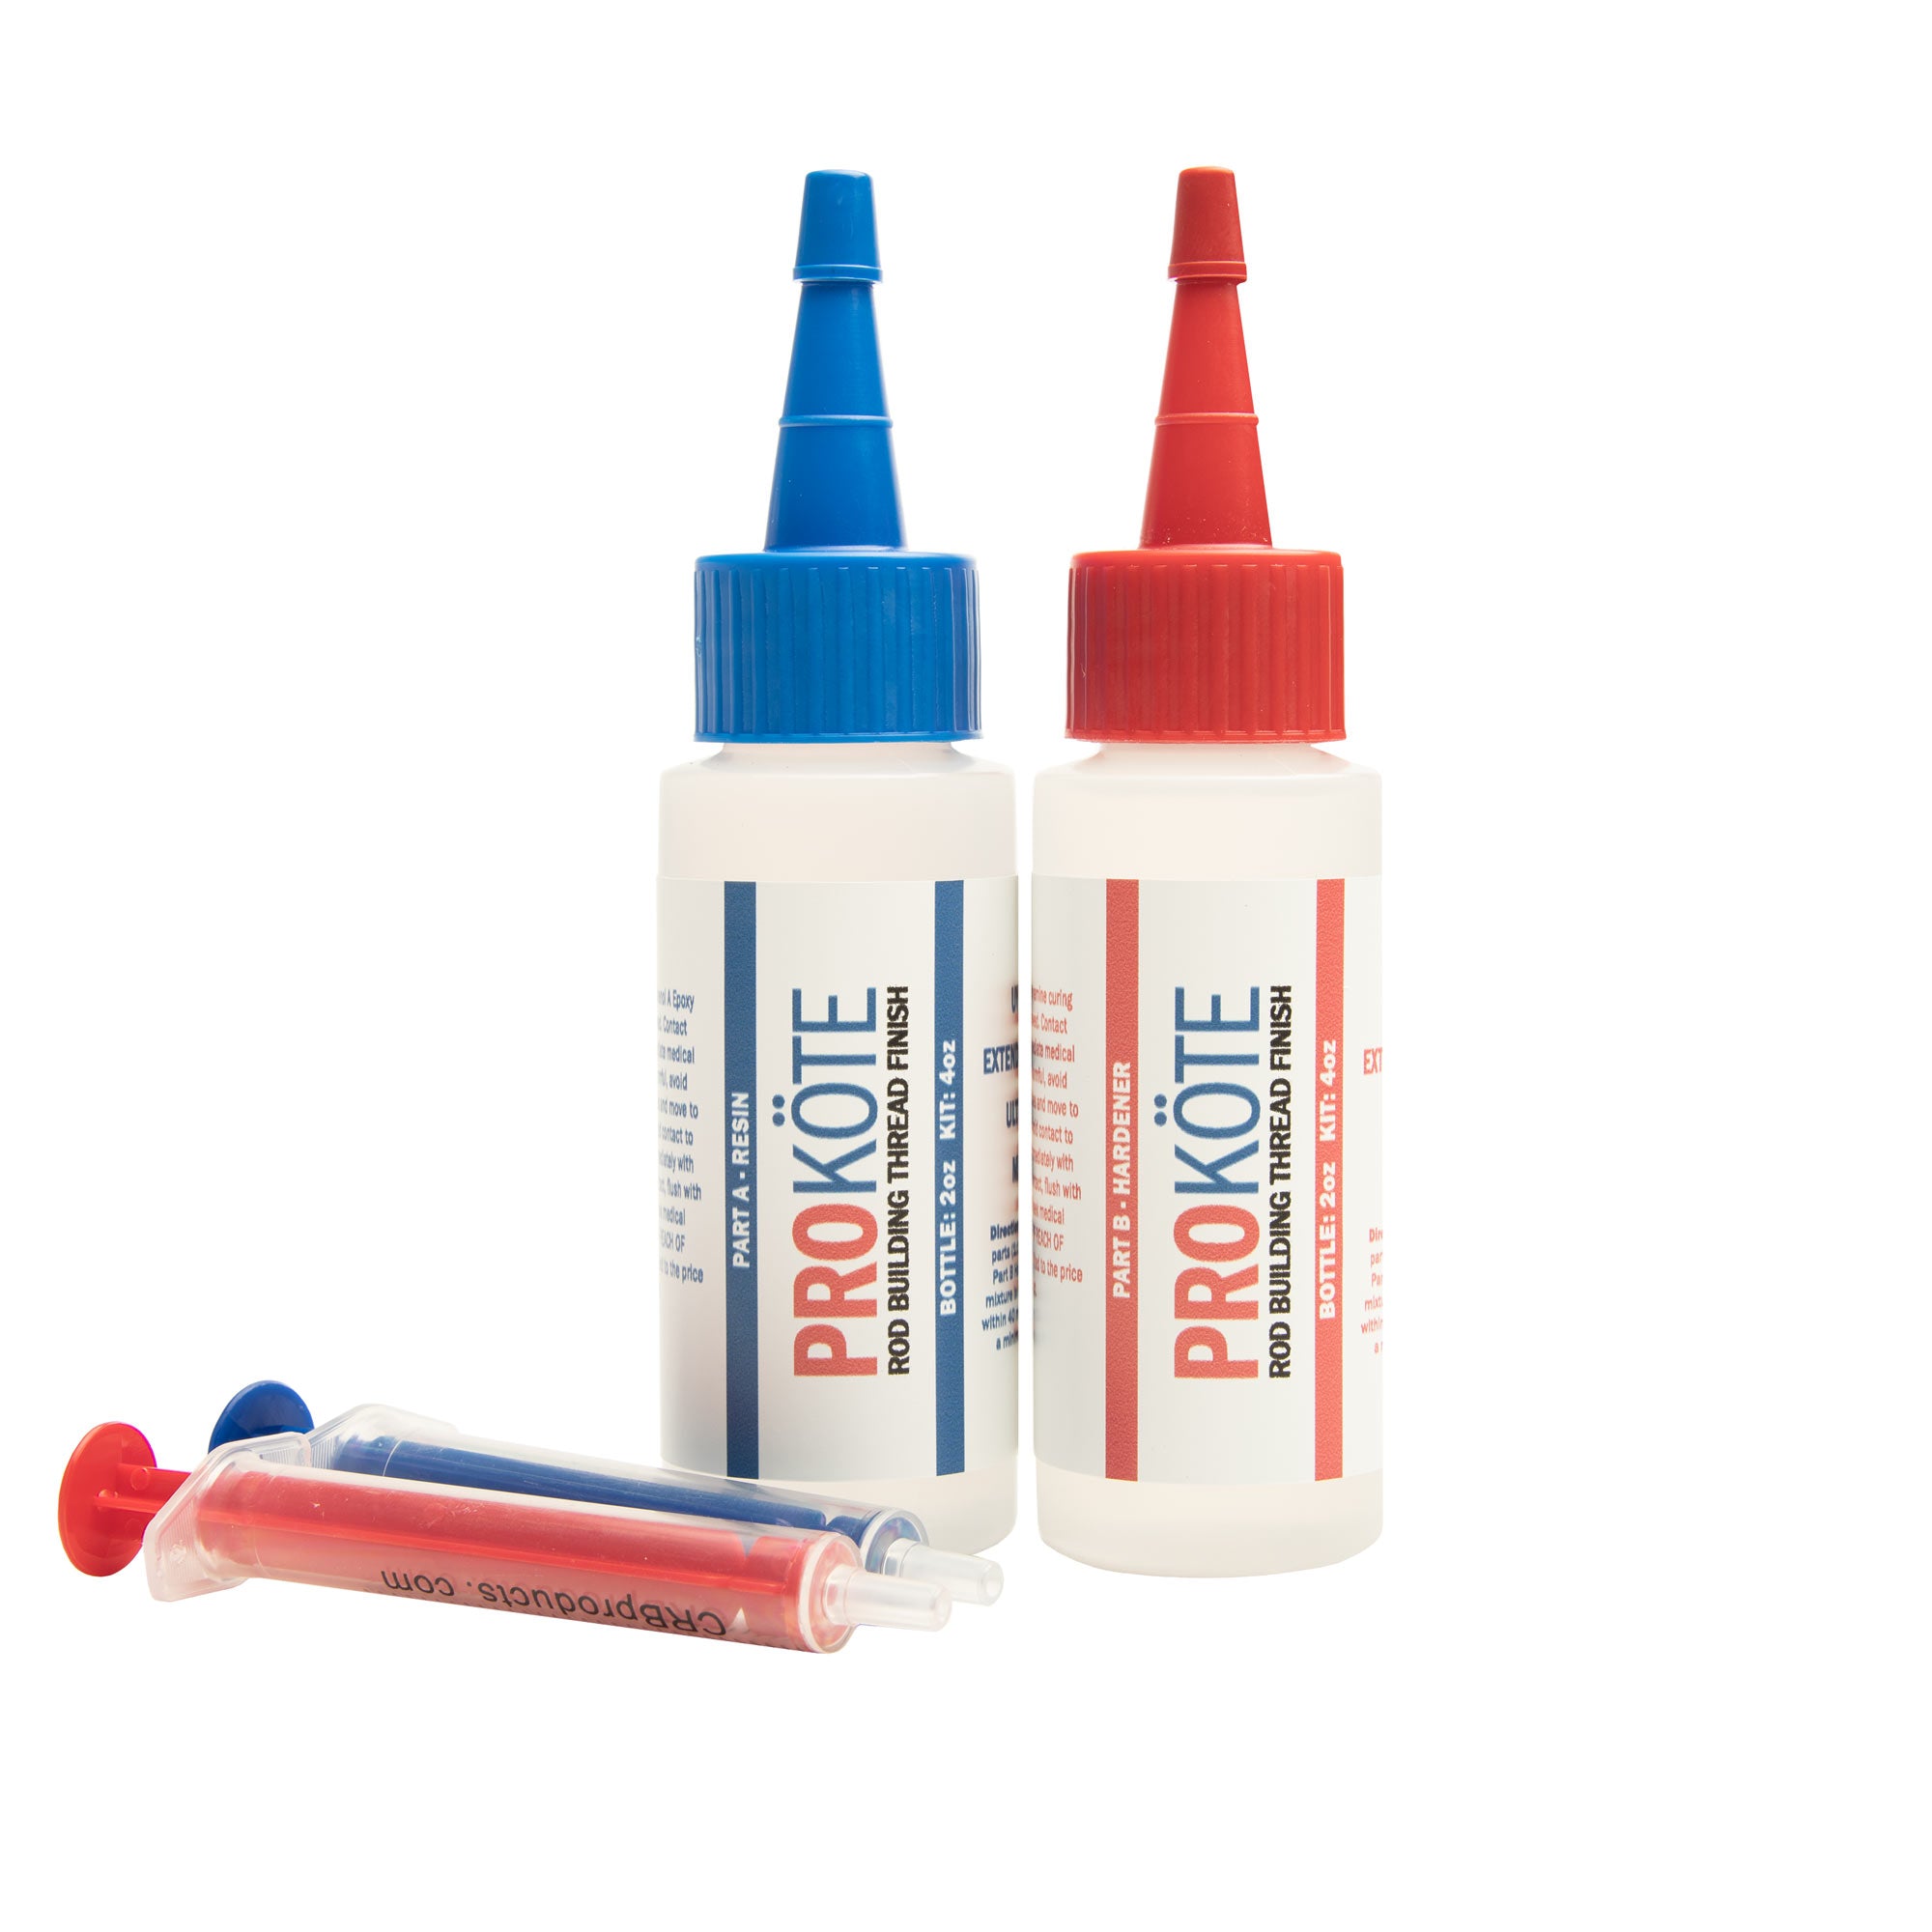 ProGlu Premium Rod Building Epoxy Glue 24ml Pre-Loaded Syringe Kit